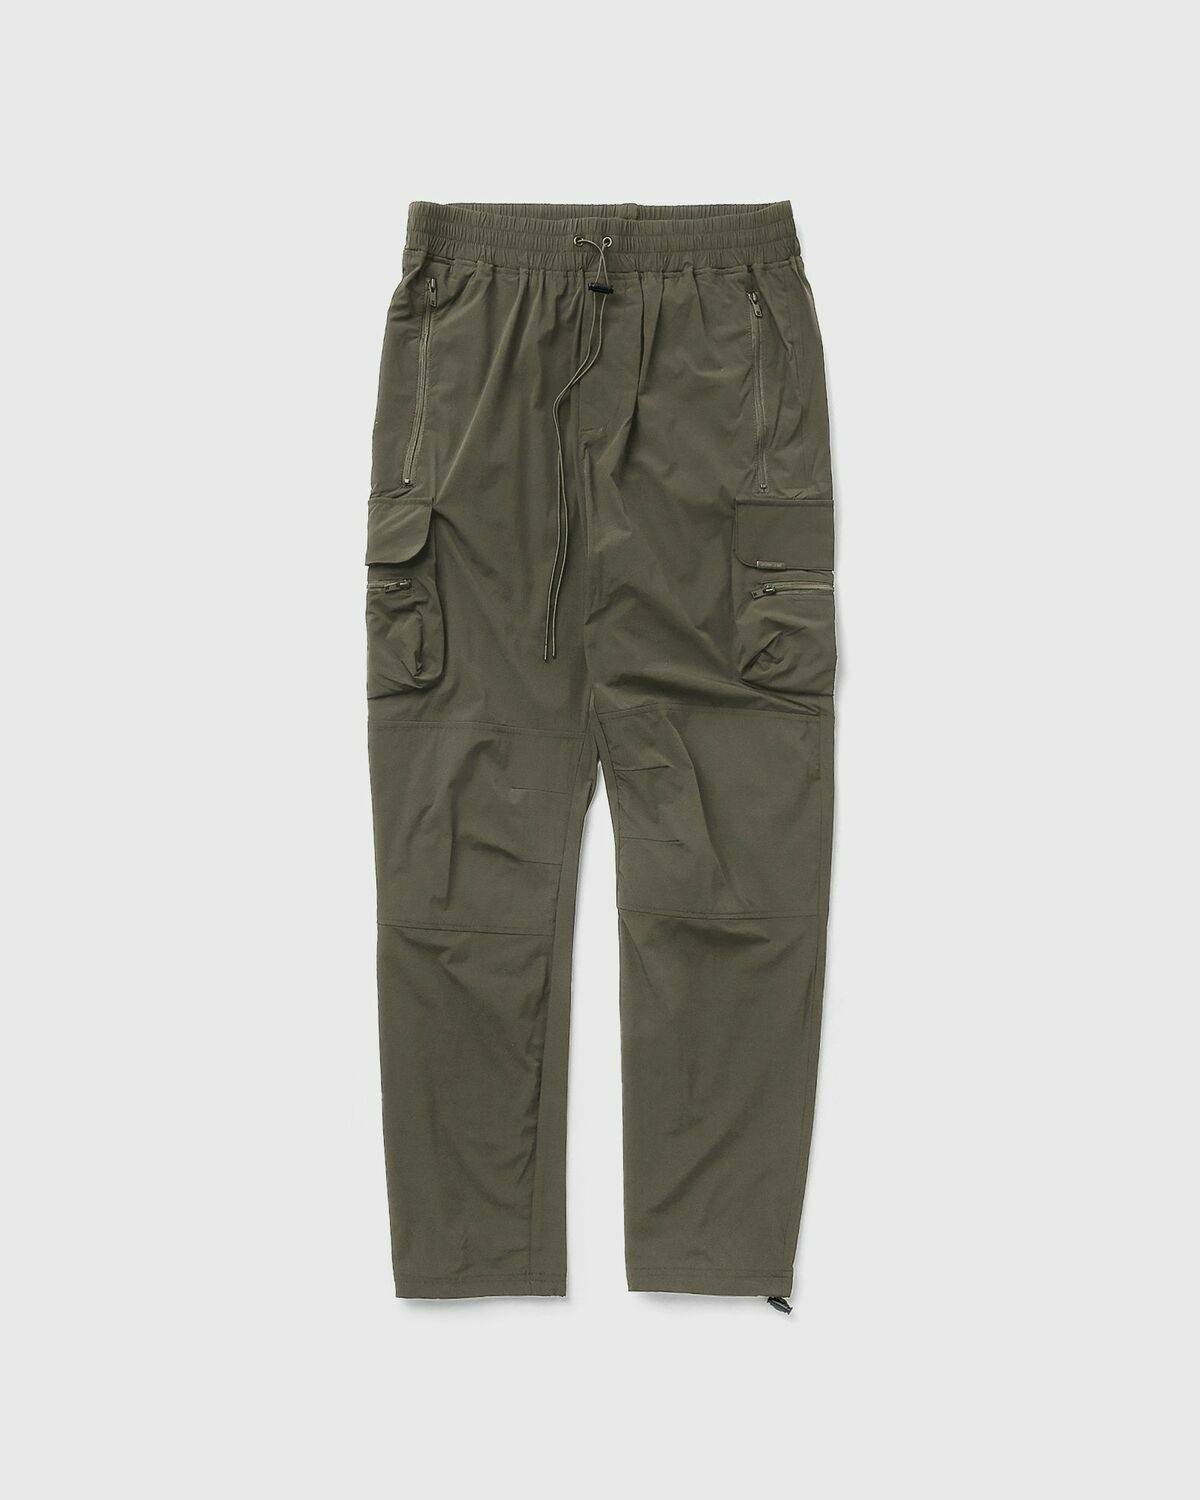 Represent 247 Pant Green - Mens - Cargo Pants Represent